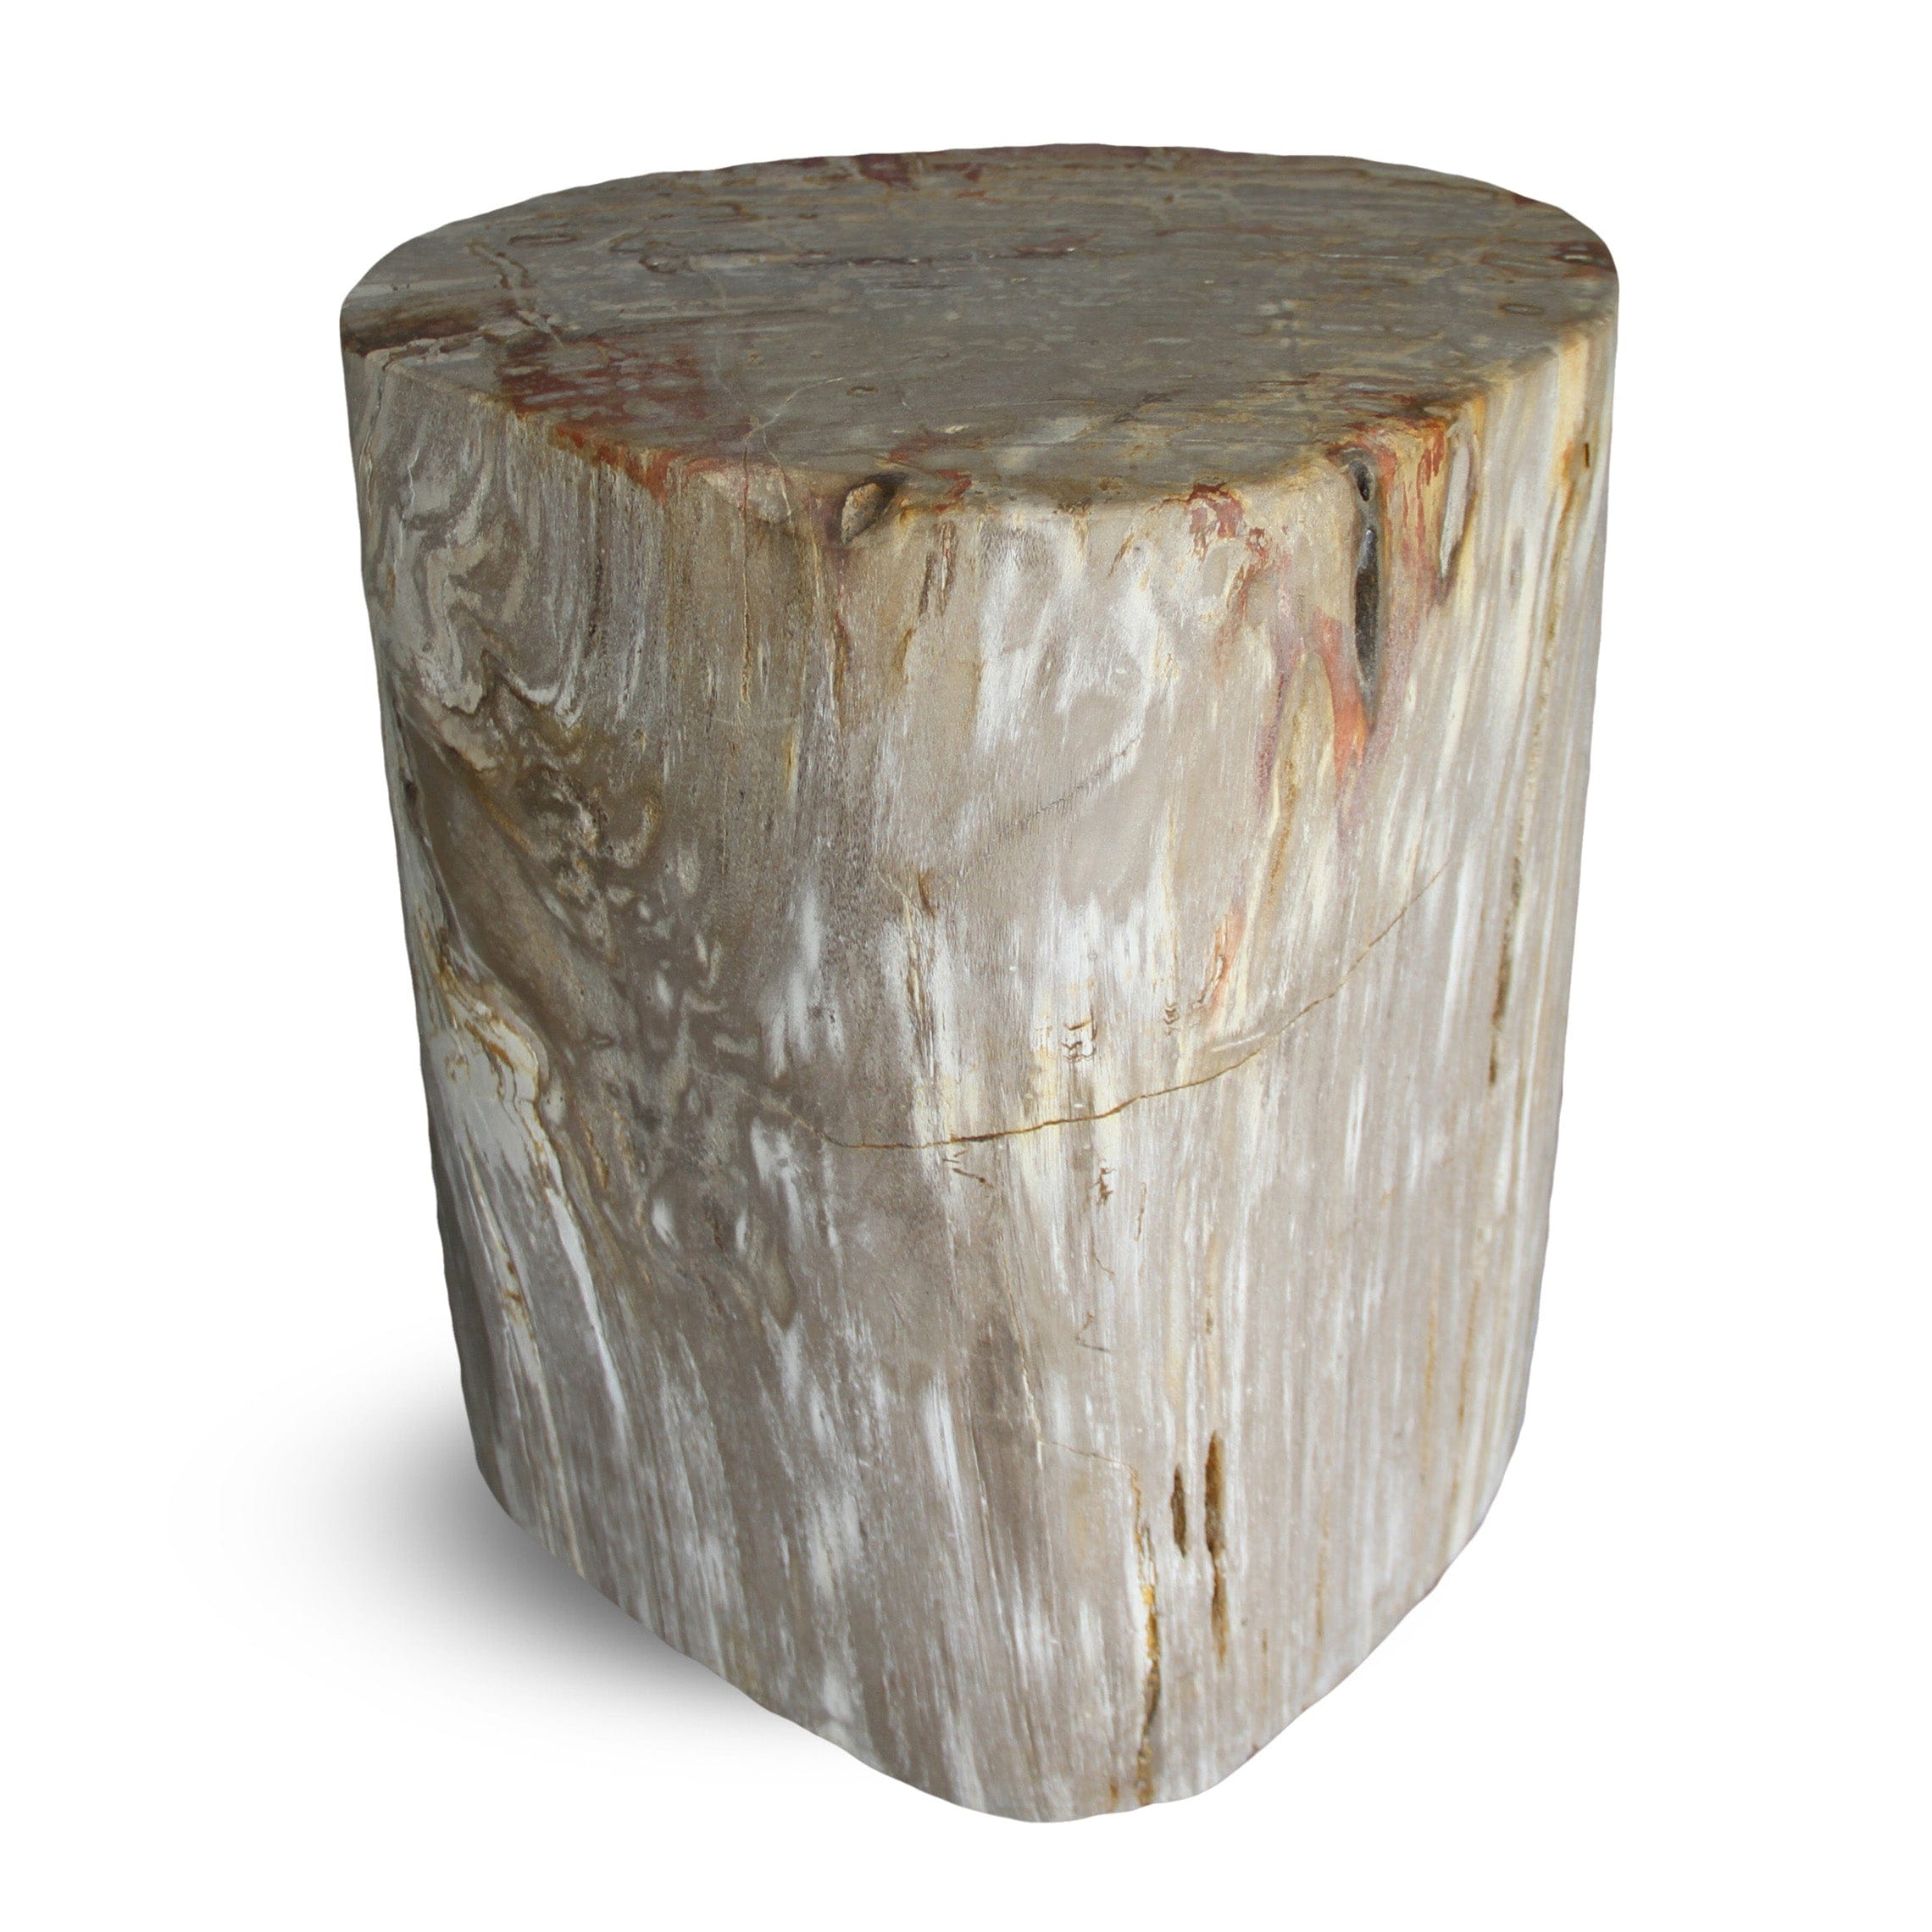 Kalifano Petrified Wood Petrified Wood Round Stump / Stool from Indonesia - 16" / 169 lbs PWS3200.005